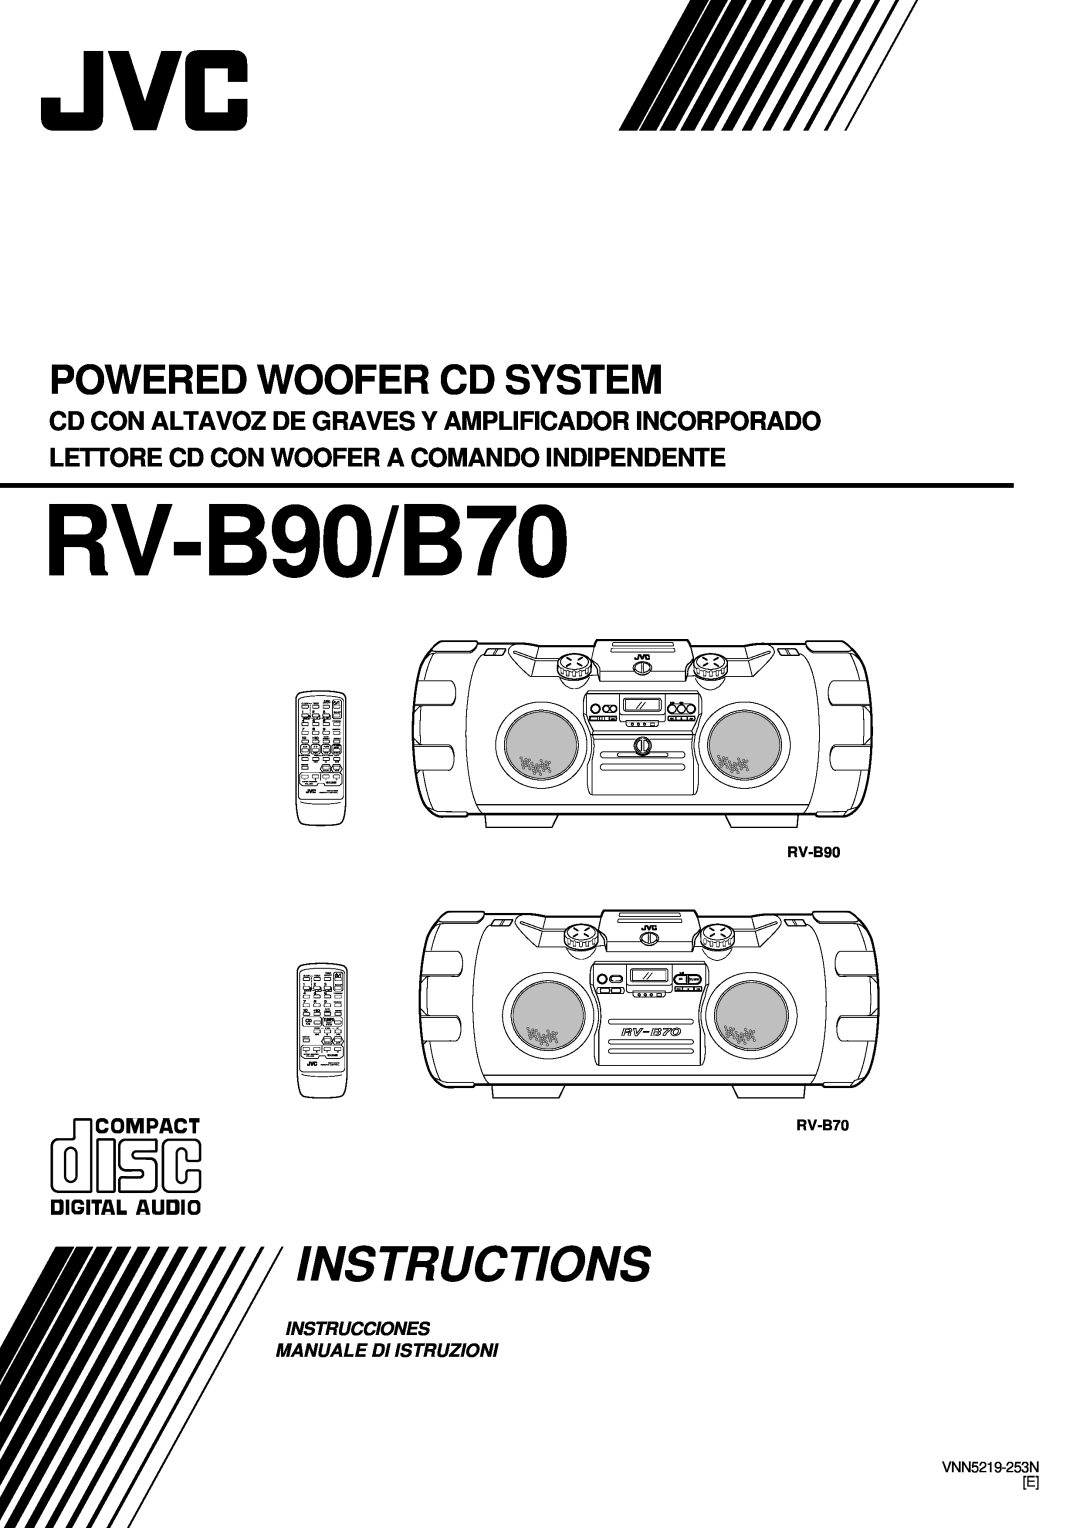 JVC manual RV-B90/B70, Instructions, Powered Woofer Cd System, Instrucciones Manuale Di Istruzioni, Cd Tuner, Sleep 